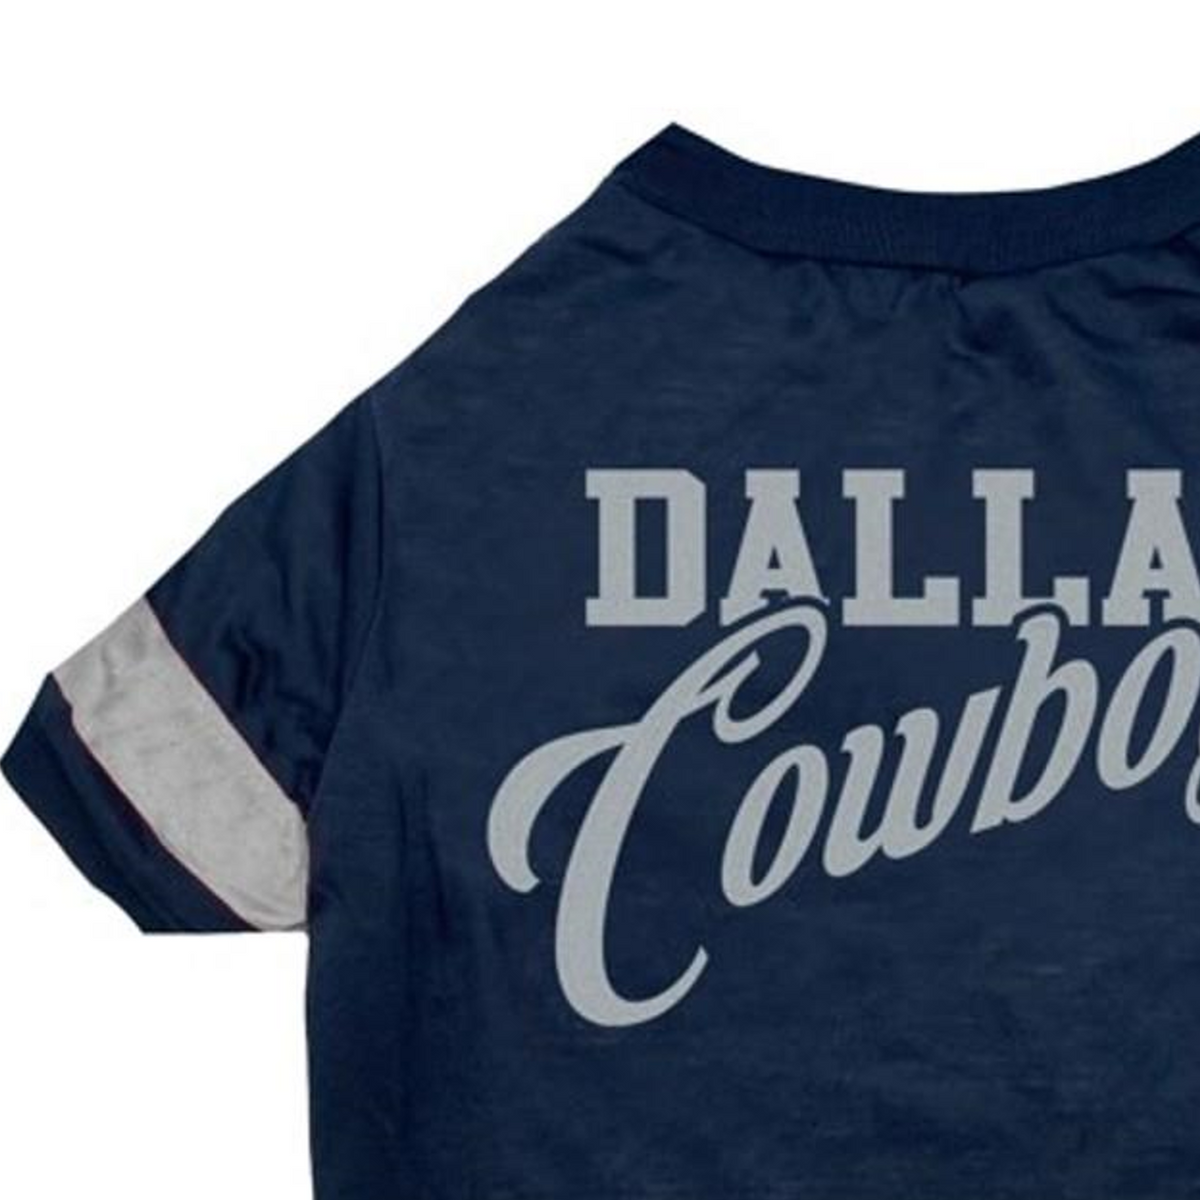 Houston Texans NFL Team Stripe Cowboy Hat